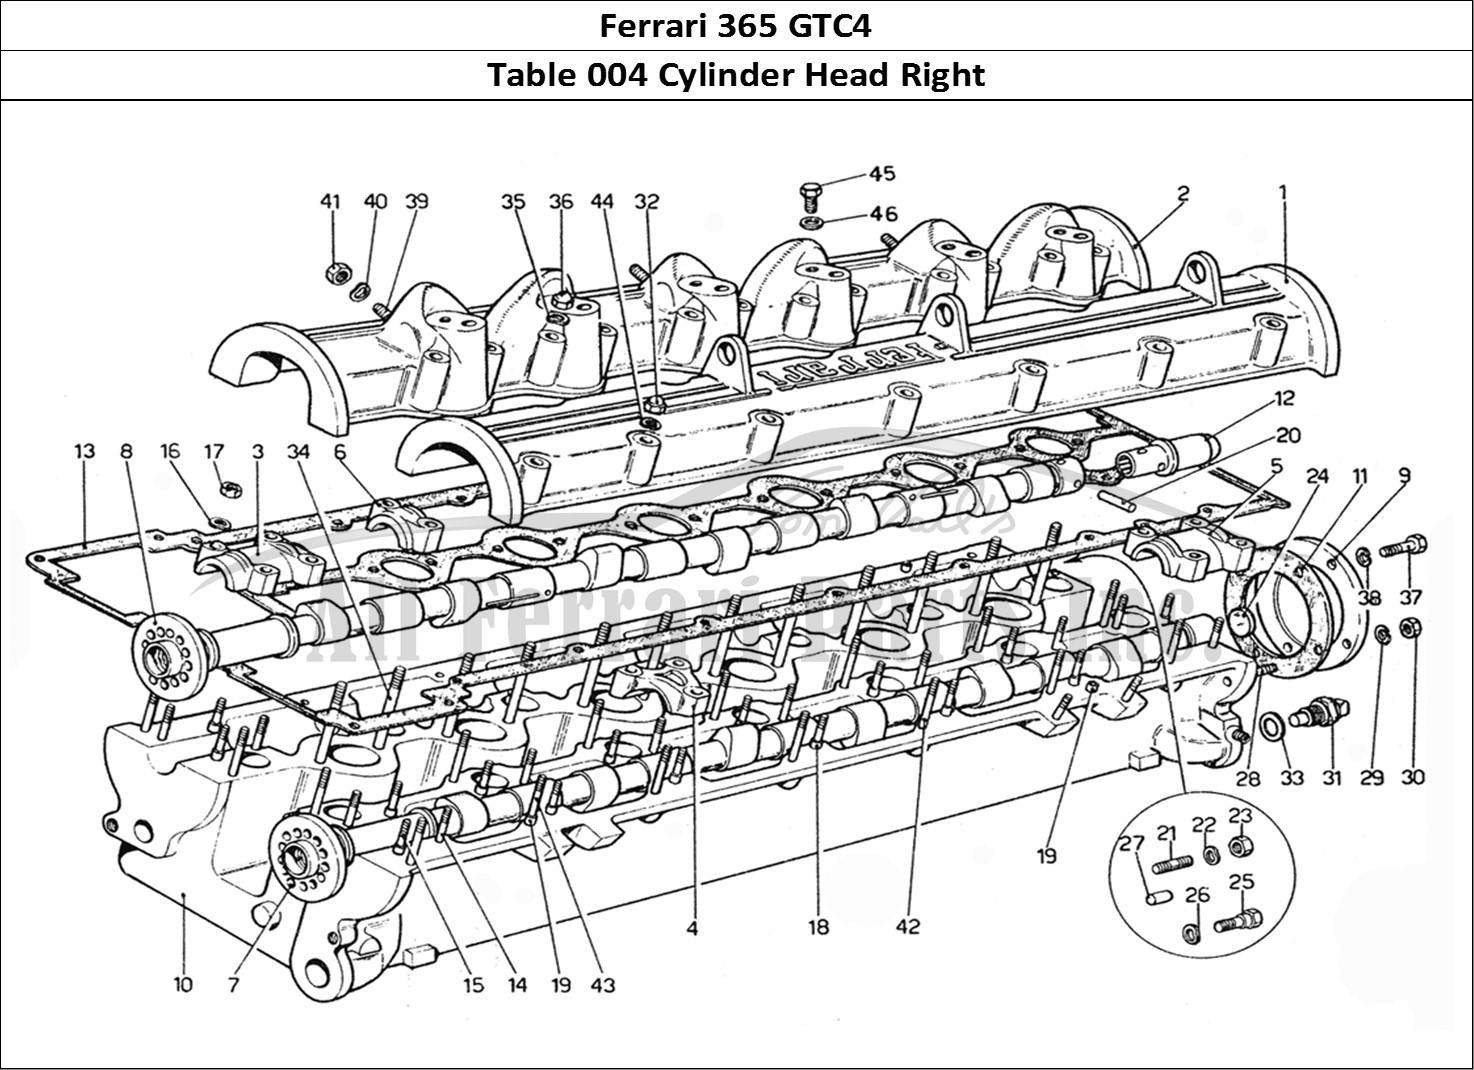 Ferrari Parts Ferrari 365 GTC4 (Mechanical) Page 004 Cylinder head RHS